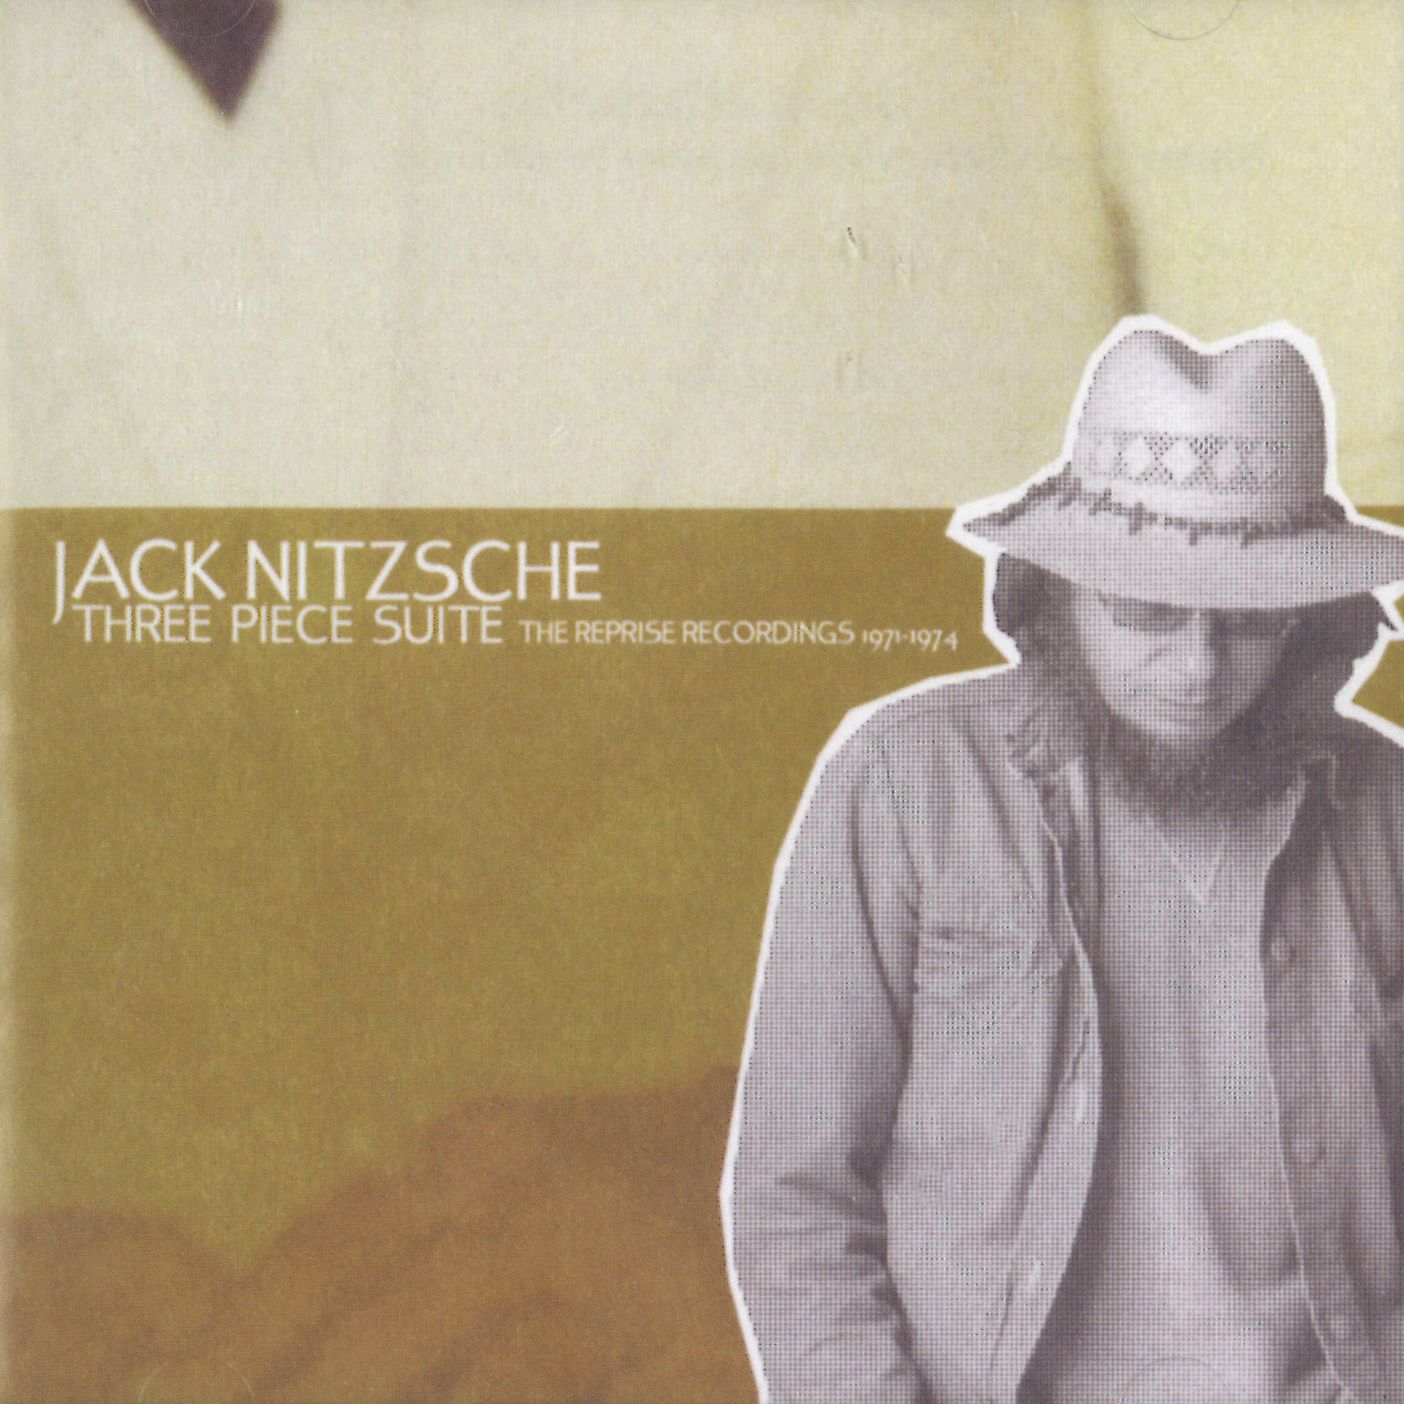 JACK NITZSCHE / ジャック・ニッチェ / THREE PIECE SUITE: THE REPRISE RECORDINGS 1971-1974 (2018 REISSUE)